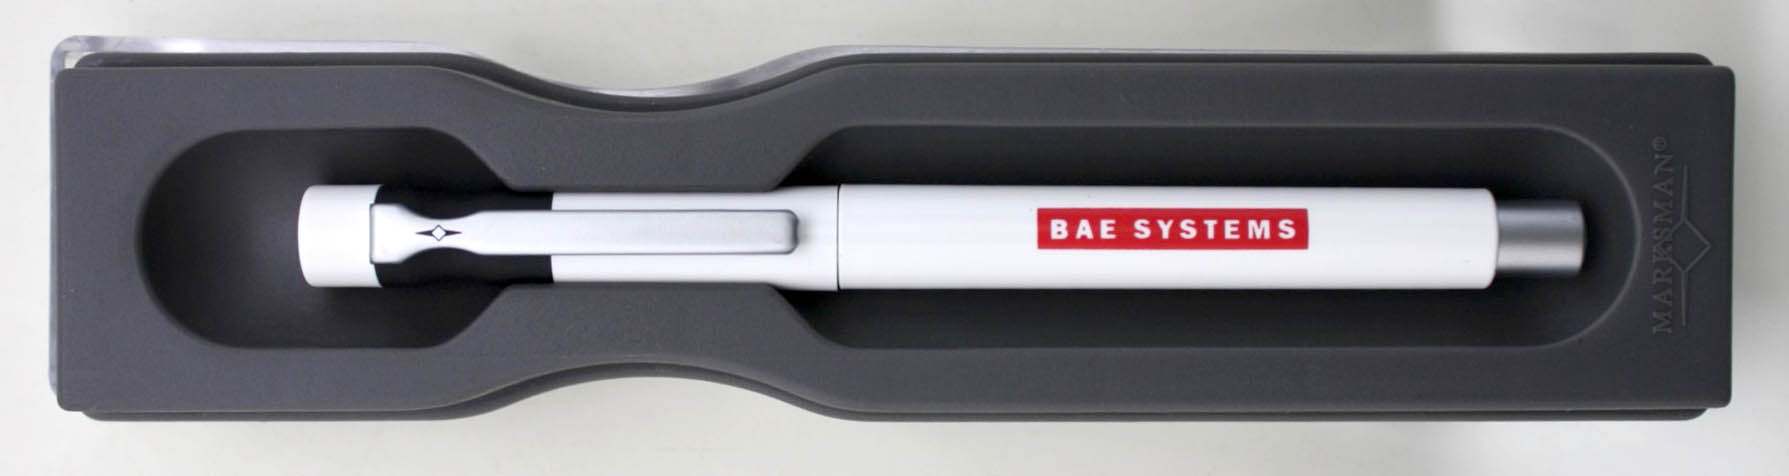 BAE Systems Pen